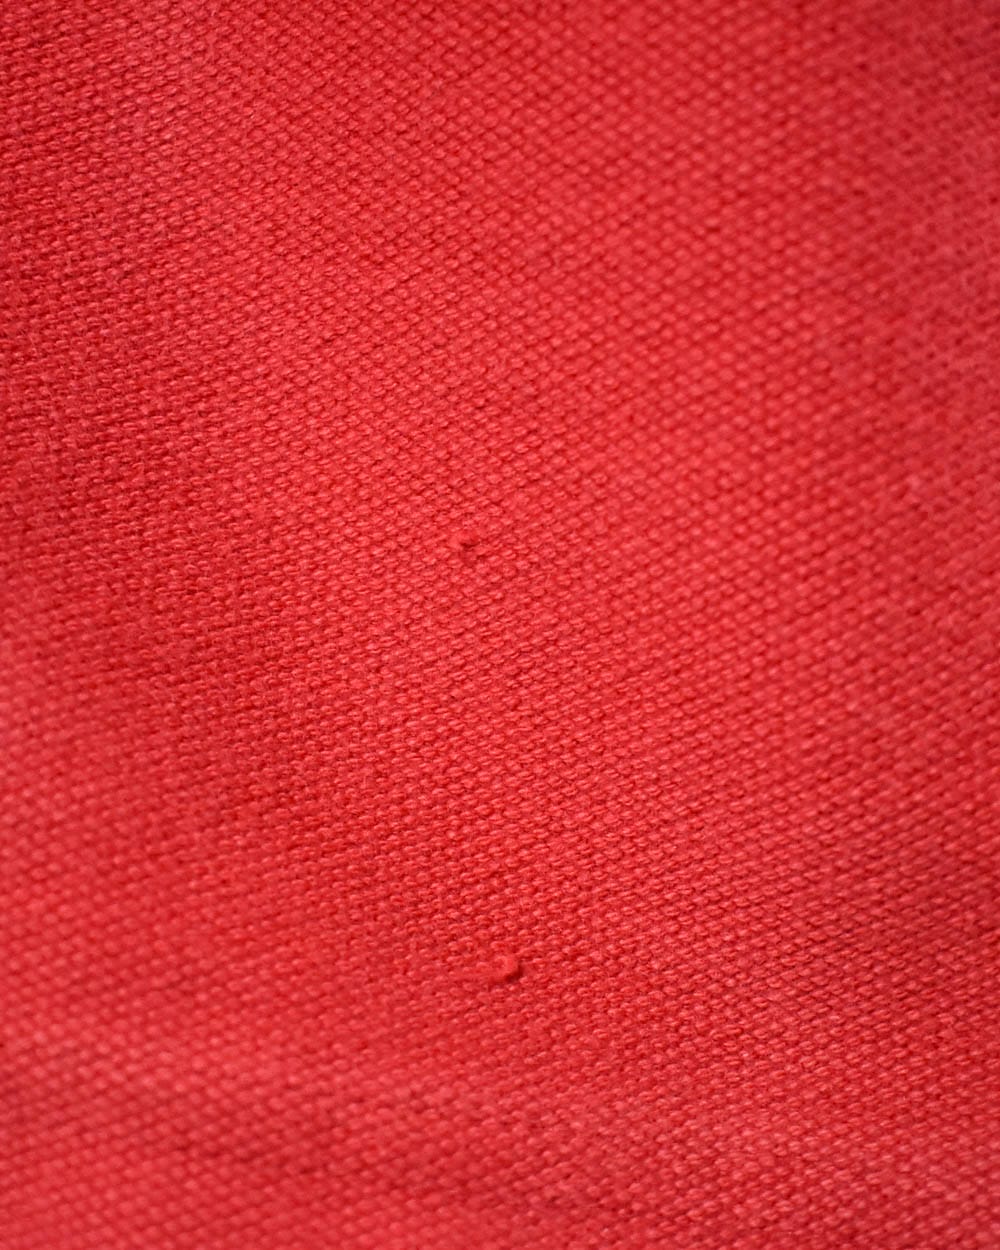 Red Nike 1/4 Zip Polo Shirt - X-Large